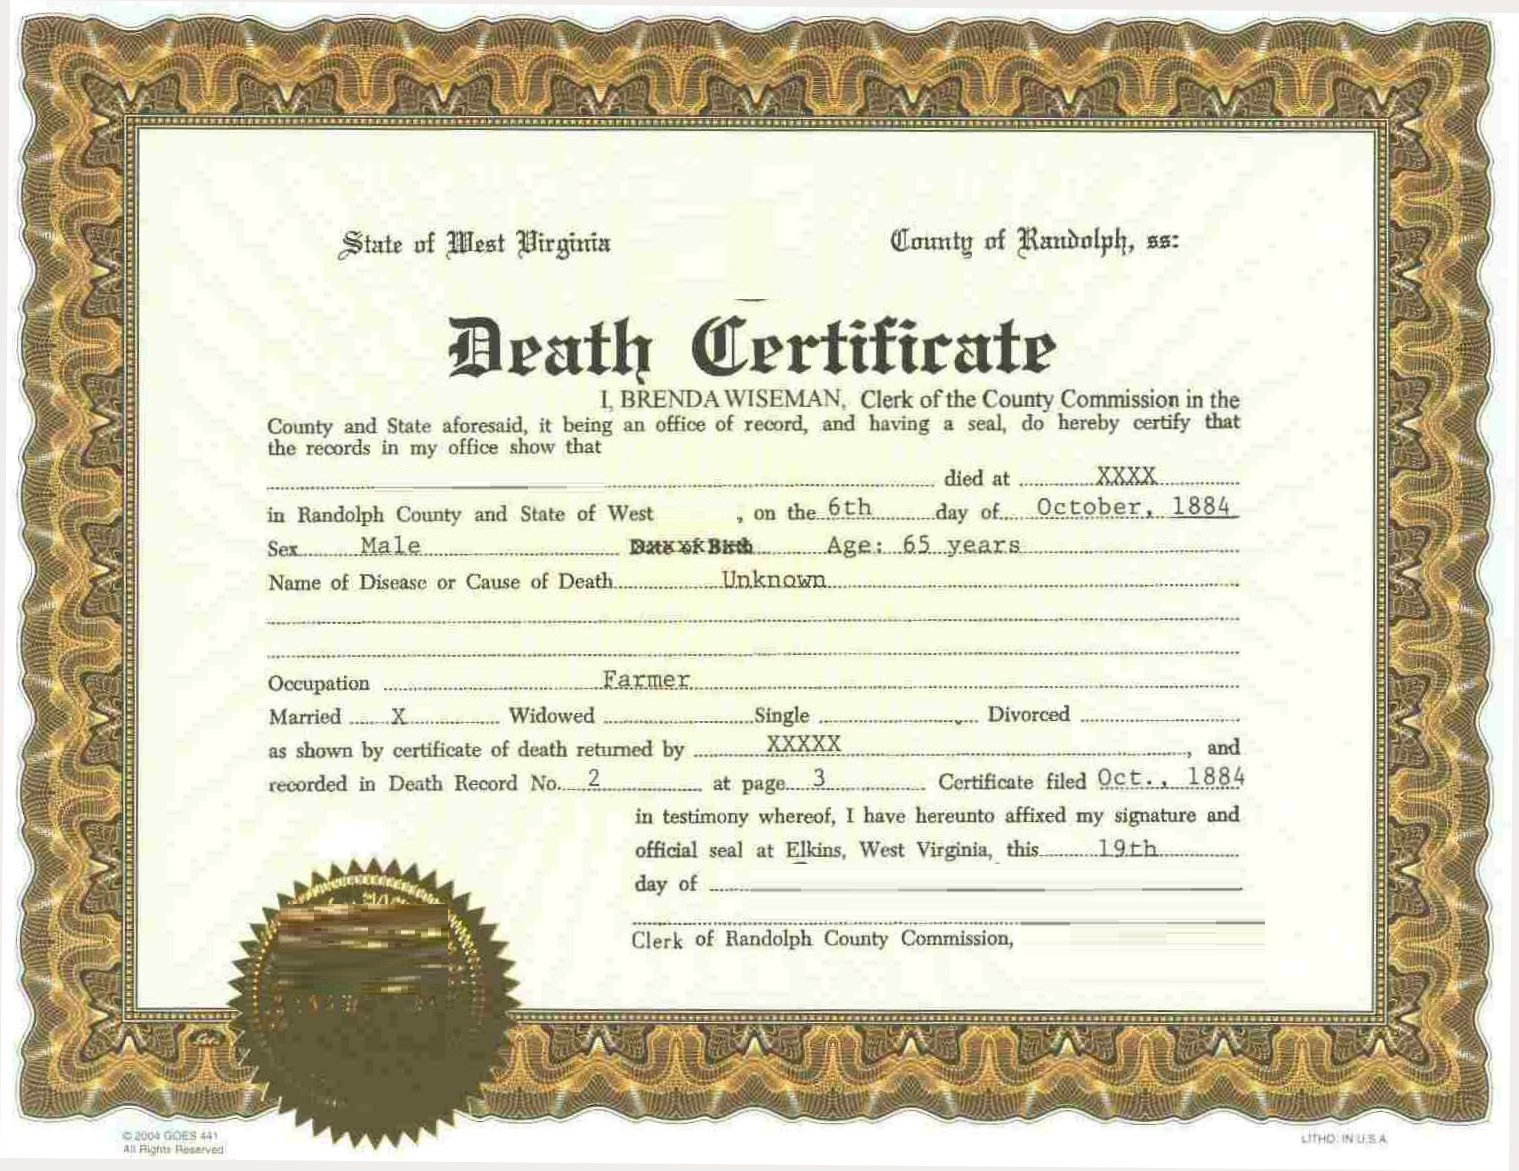 online-procedure-for-application-of-death-certificate-in-maharashtra-govinfo-me